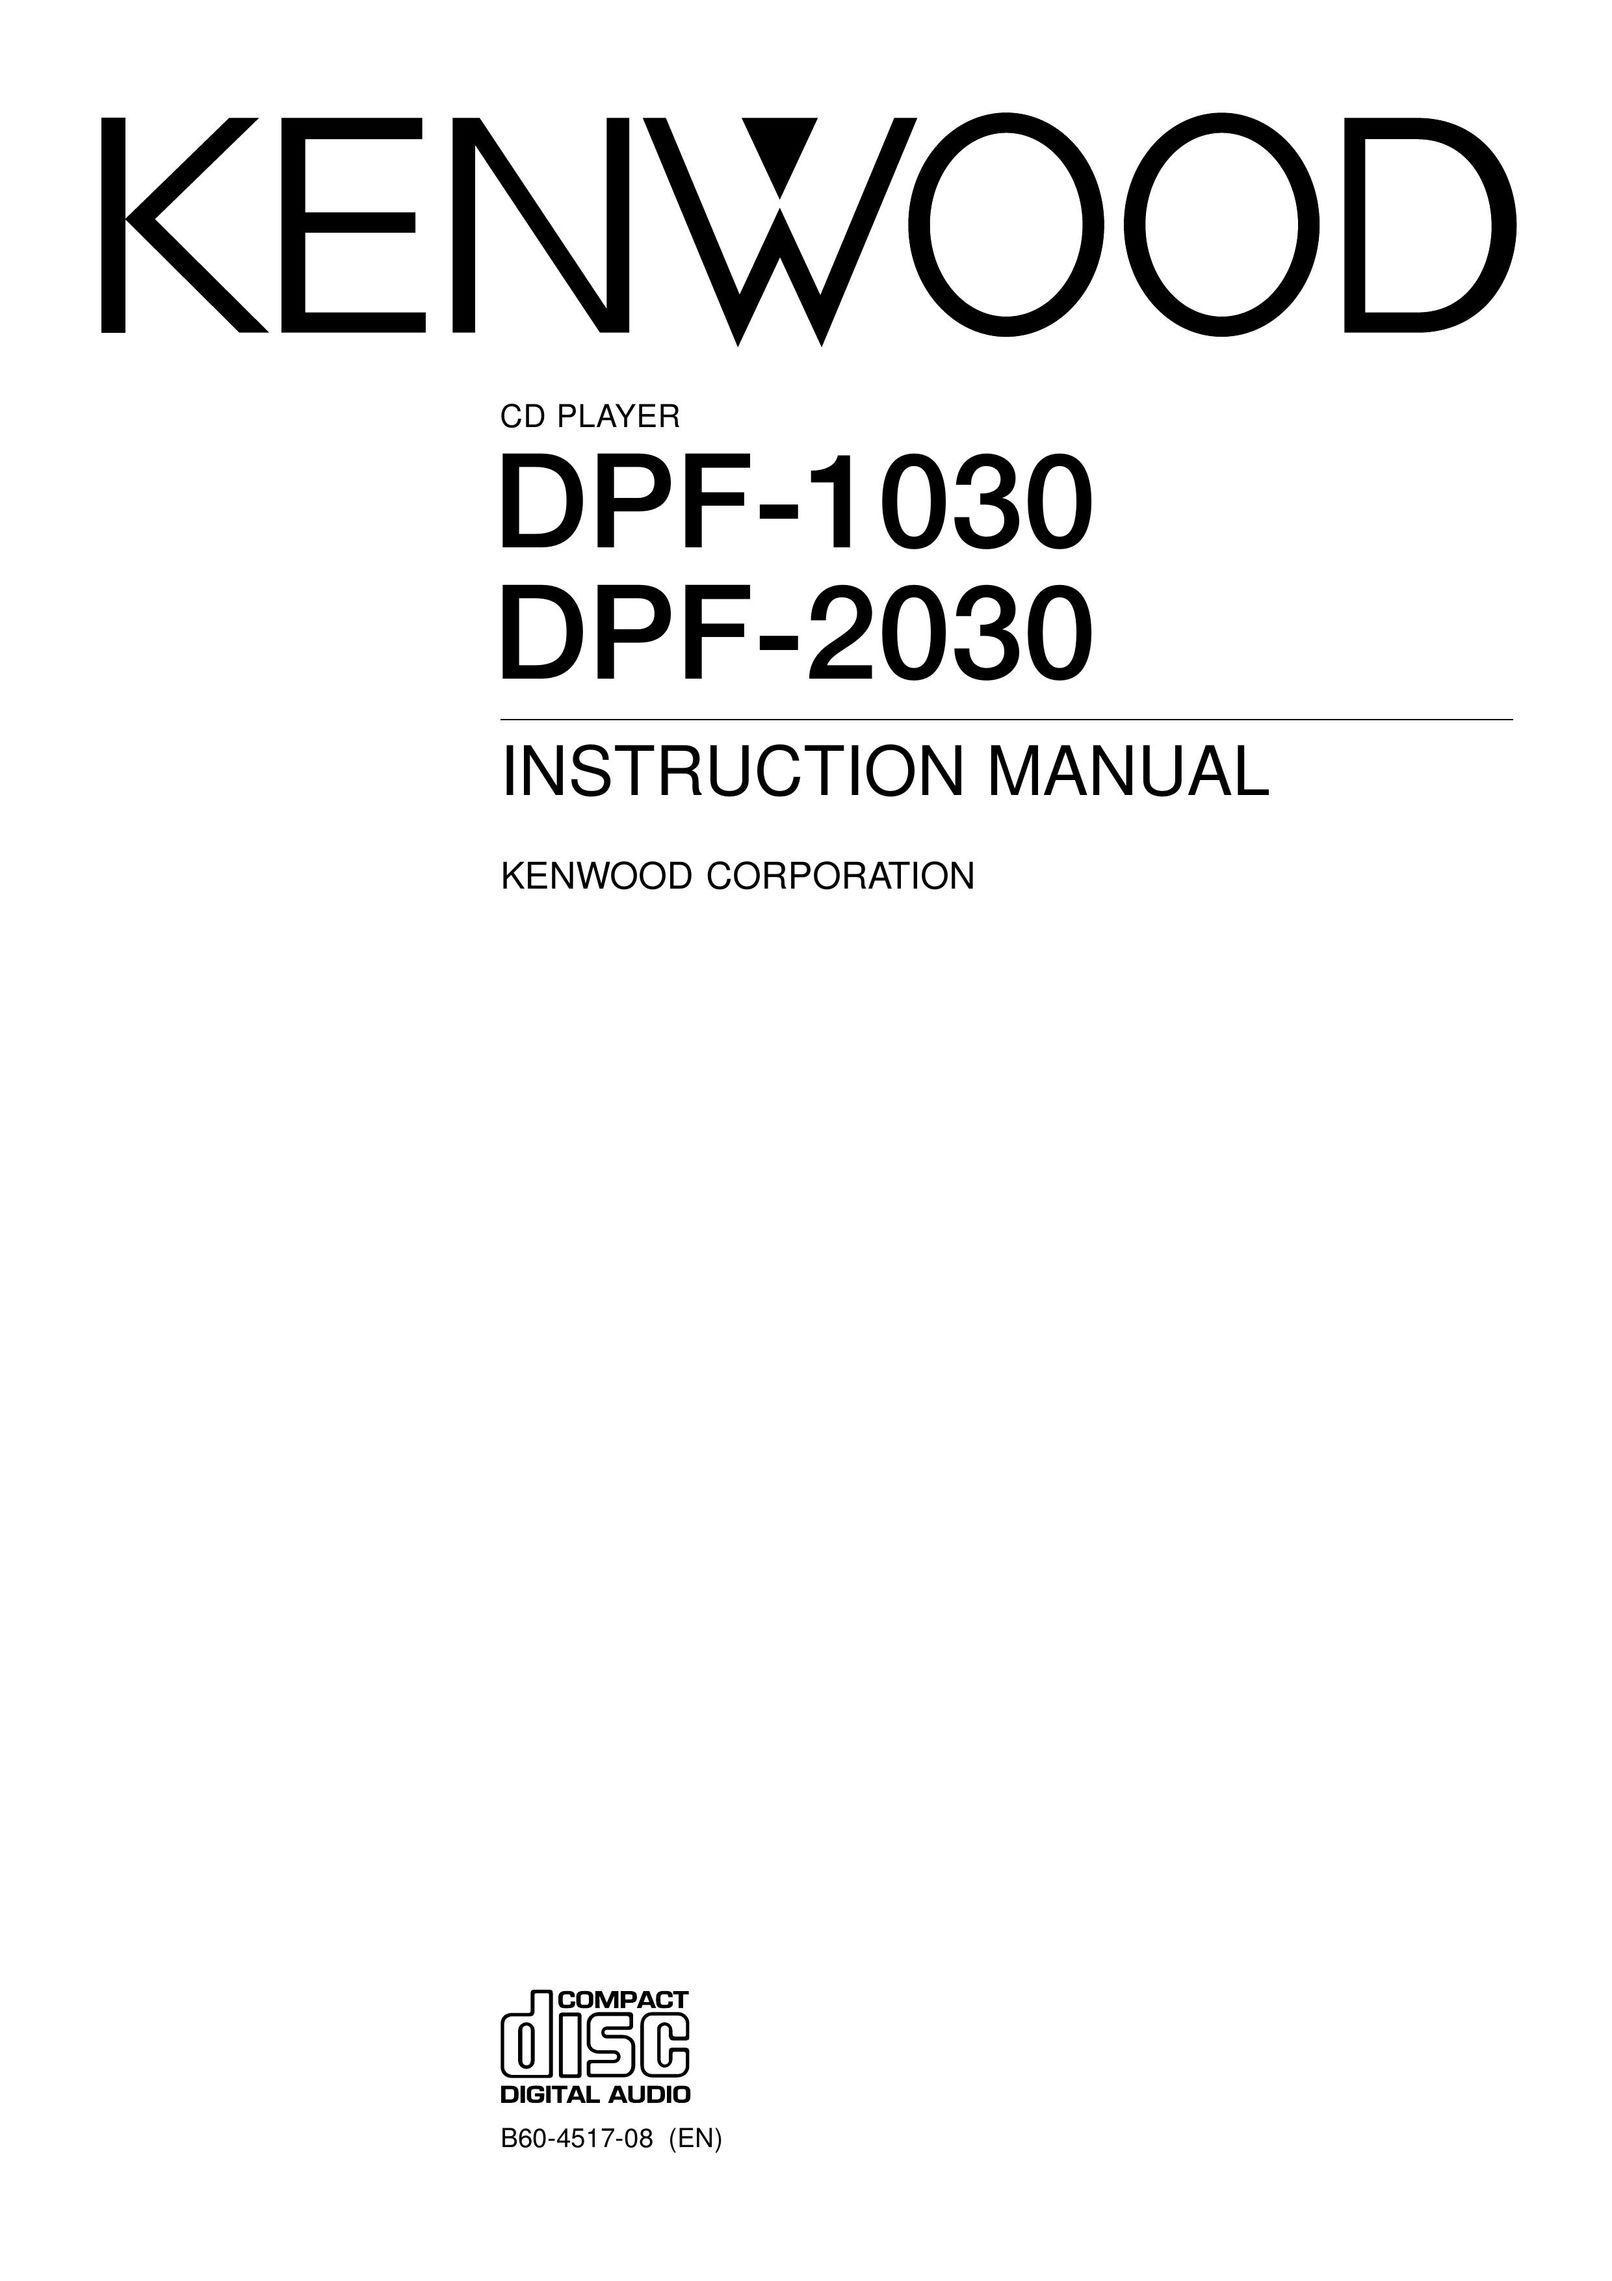 Kenwood DPF-1030 CD Player User Manual